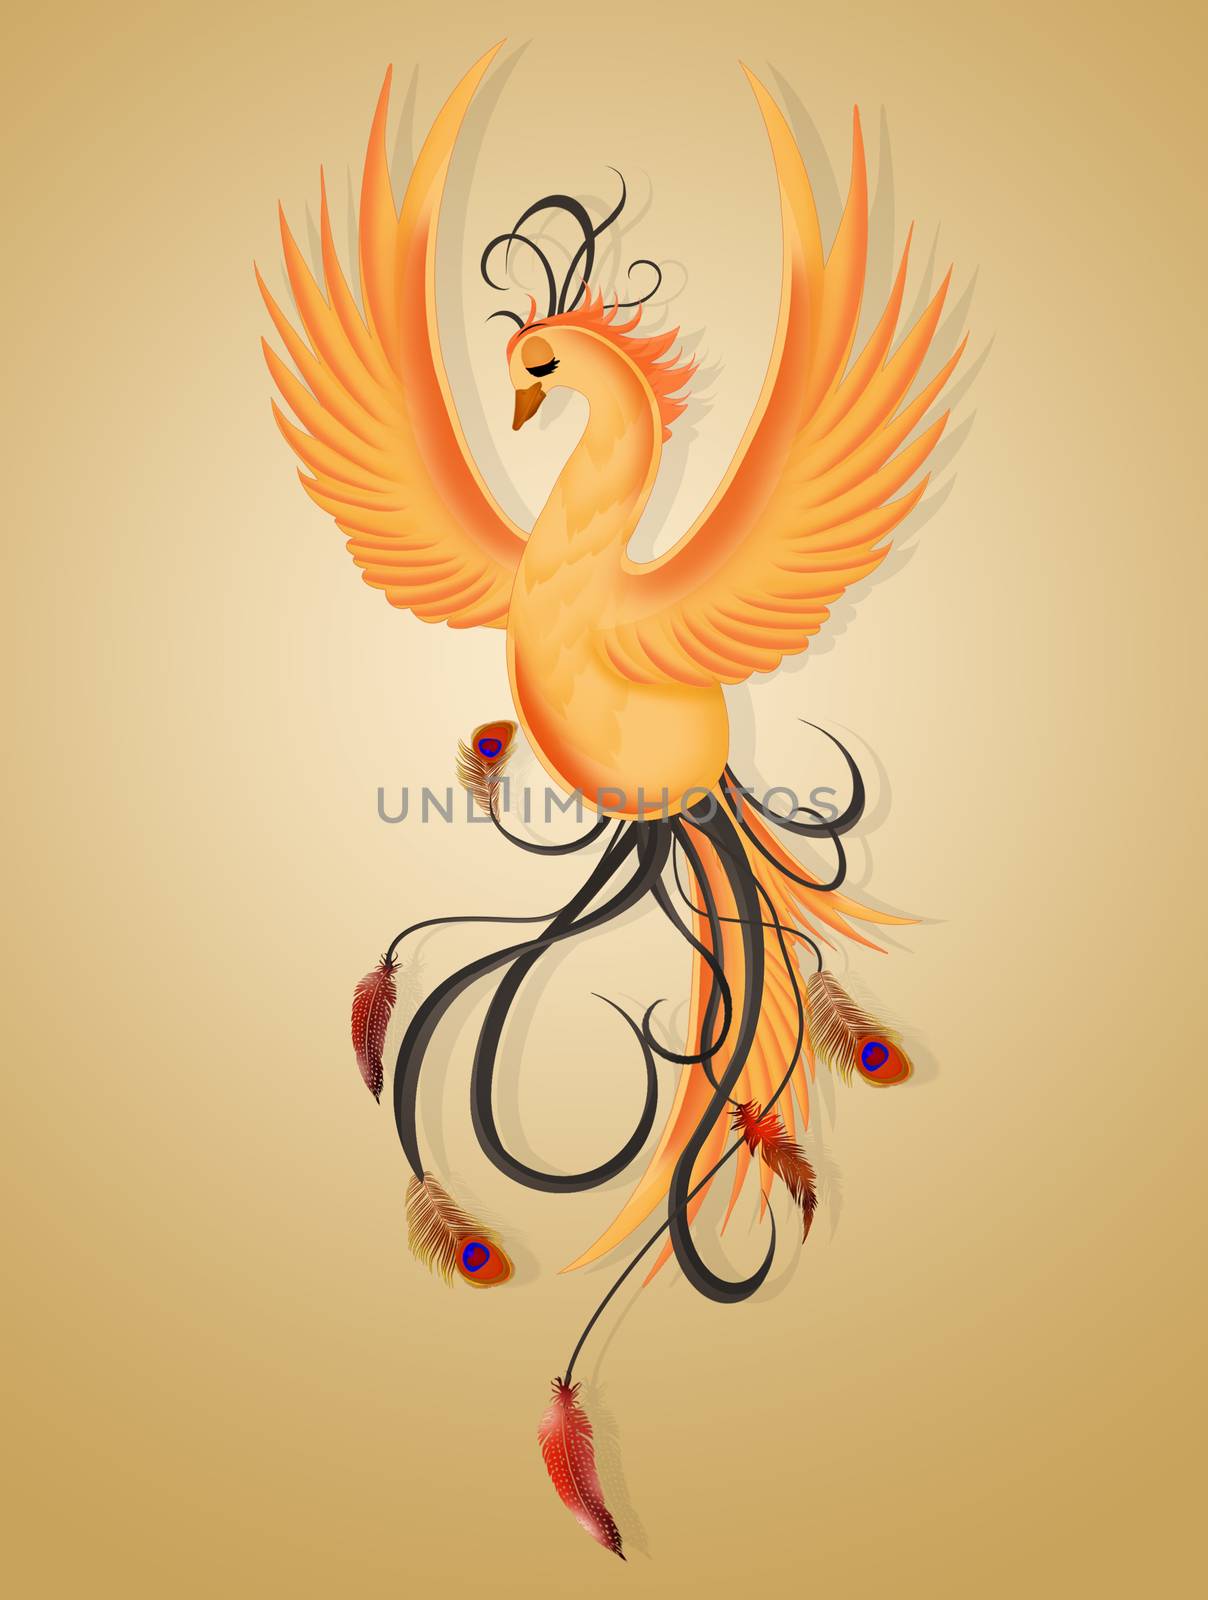 illustration of the phoenix